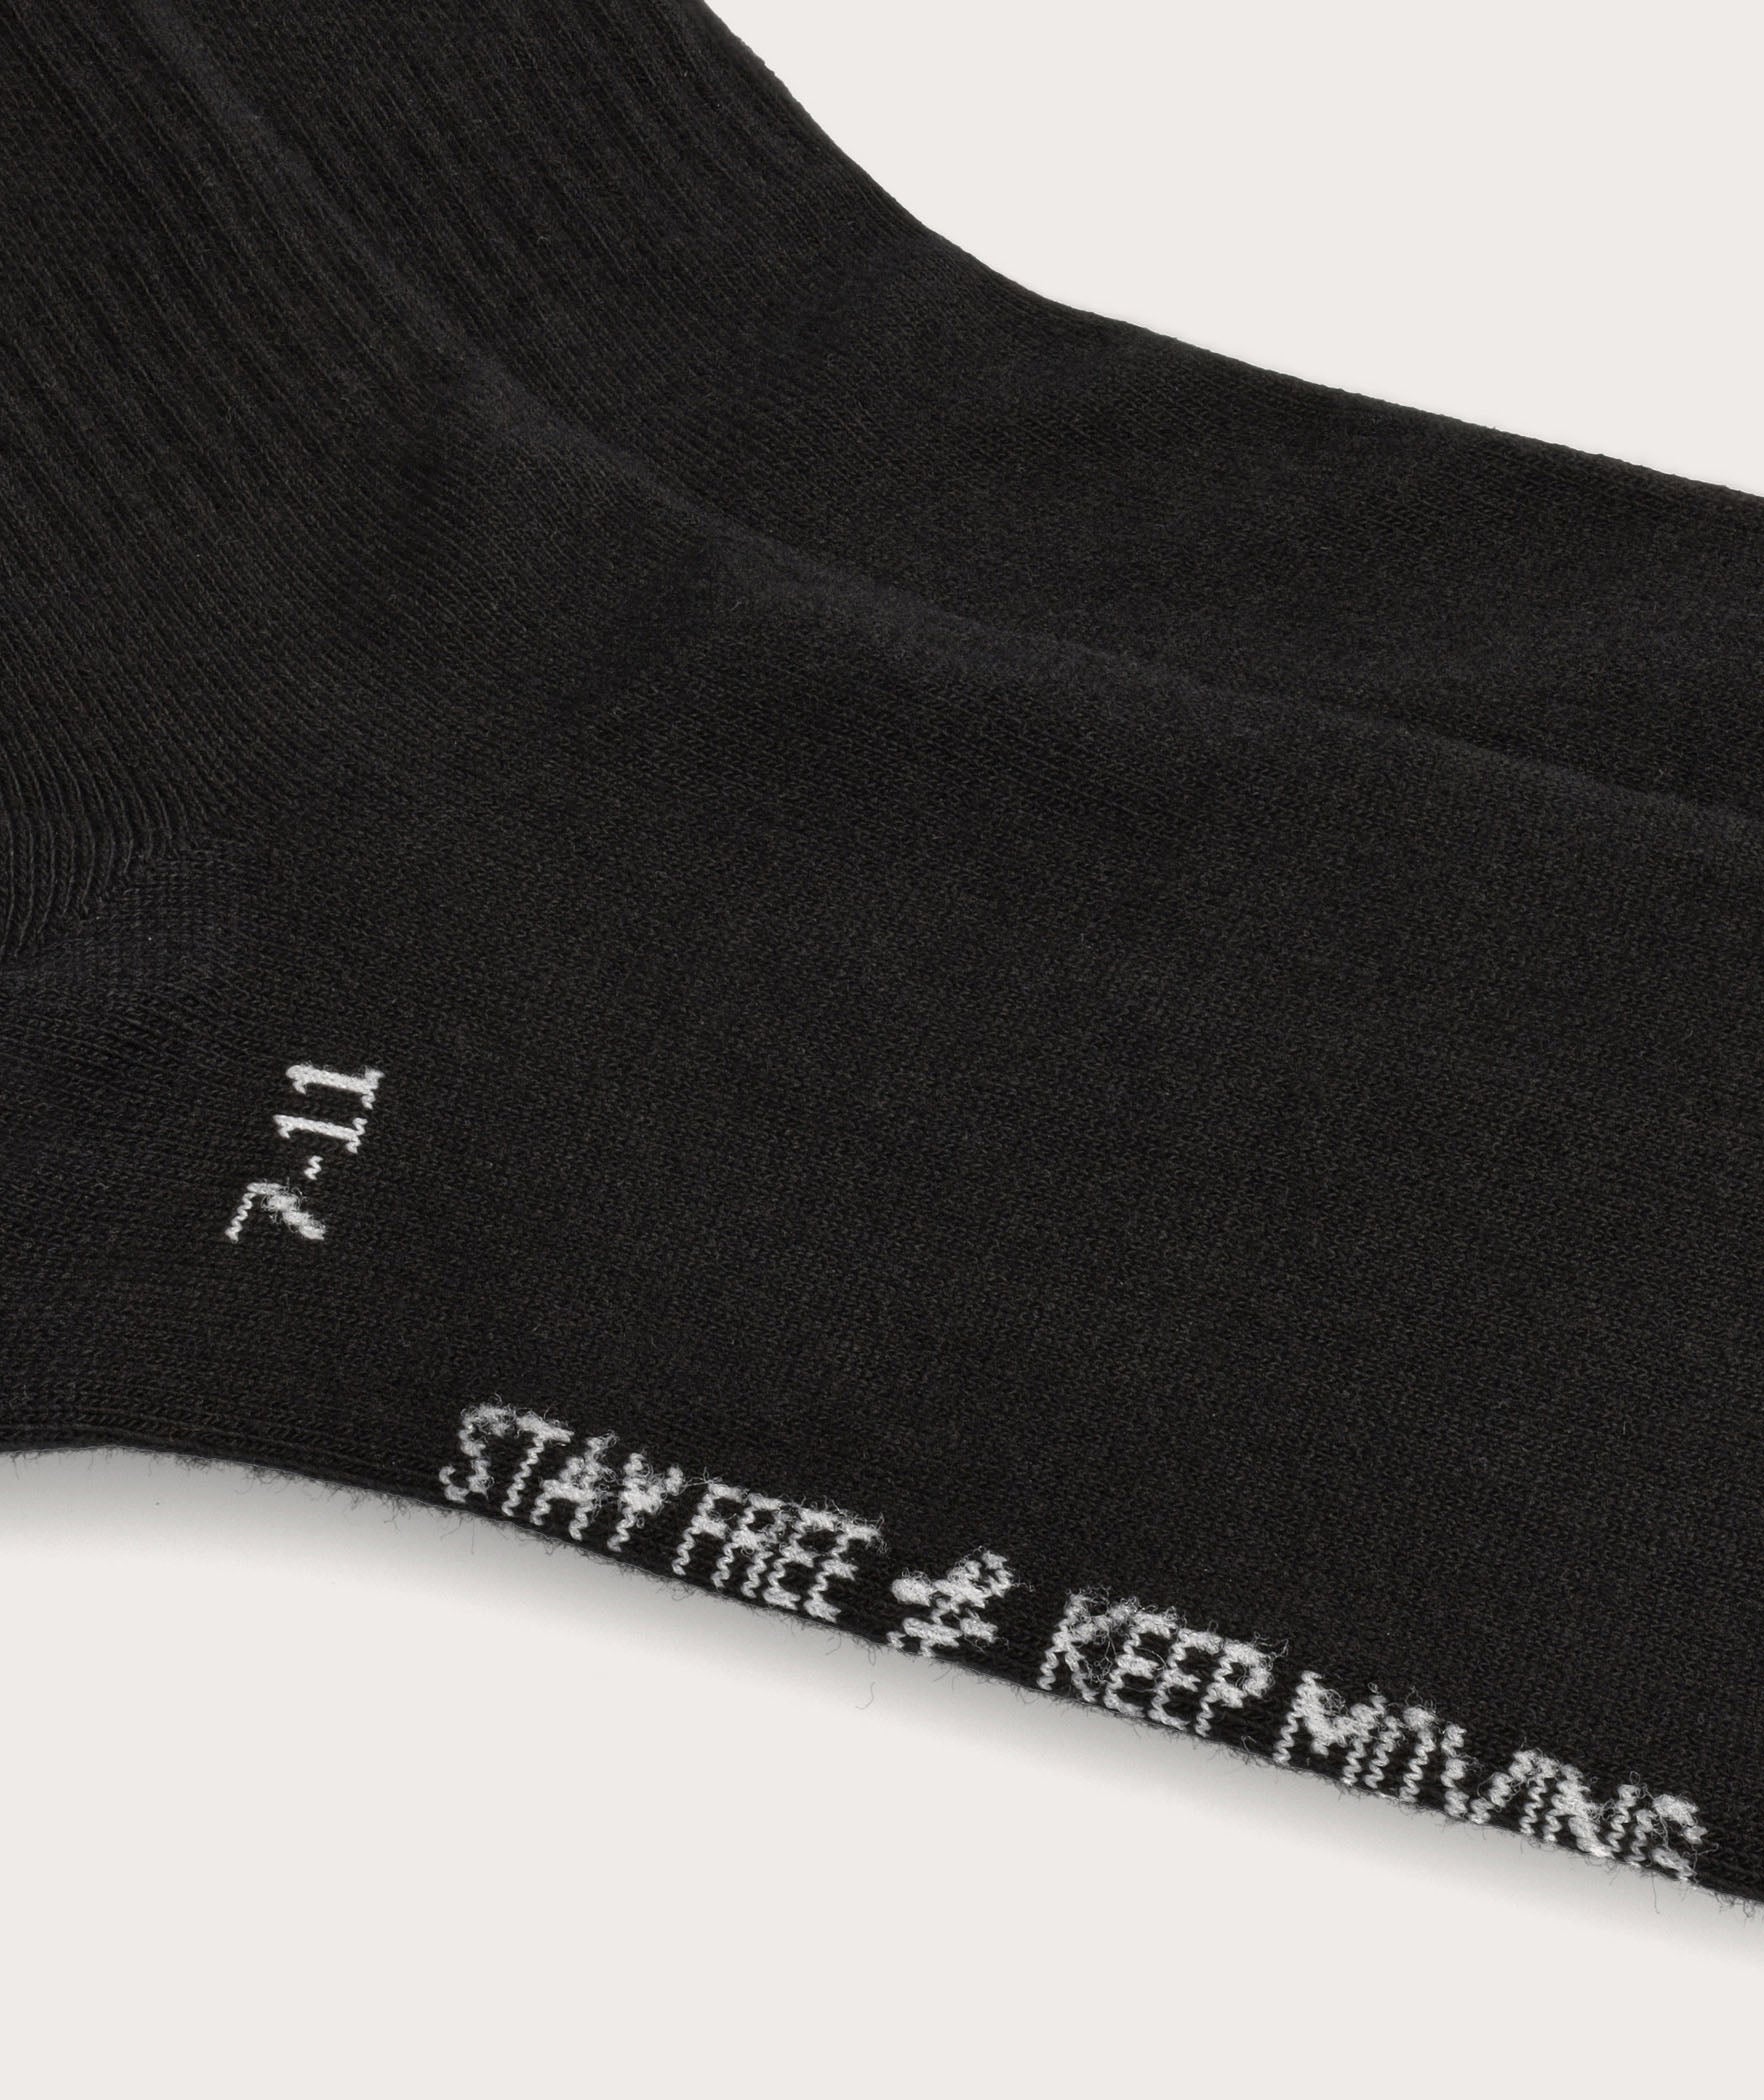 Socks FOM Active - Black/ Off-White Knot (Size 7-11)